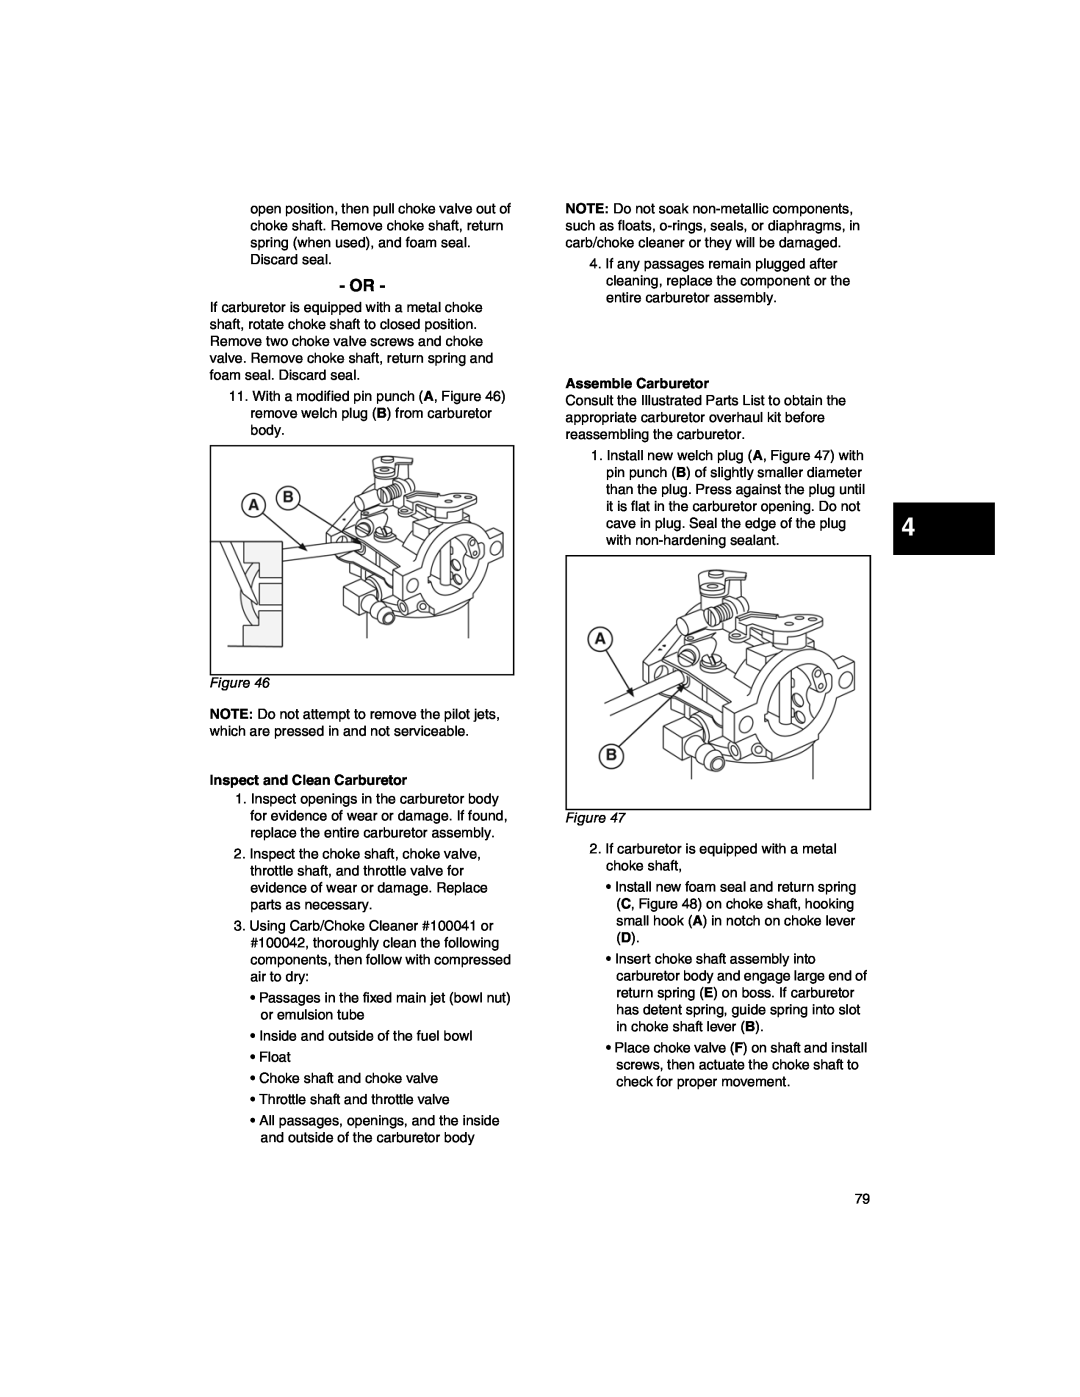 Briggs & Stratton CE8069, 271172, 270962, 276535, 273521 manual Inspect and Clean Carburetor, Assemble Carburetor 